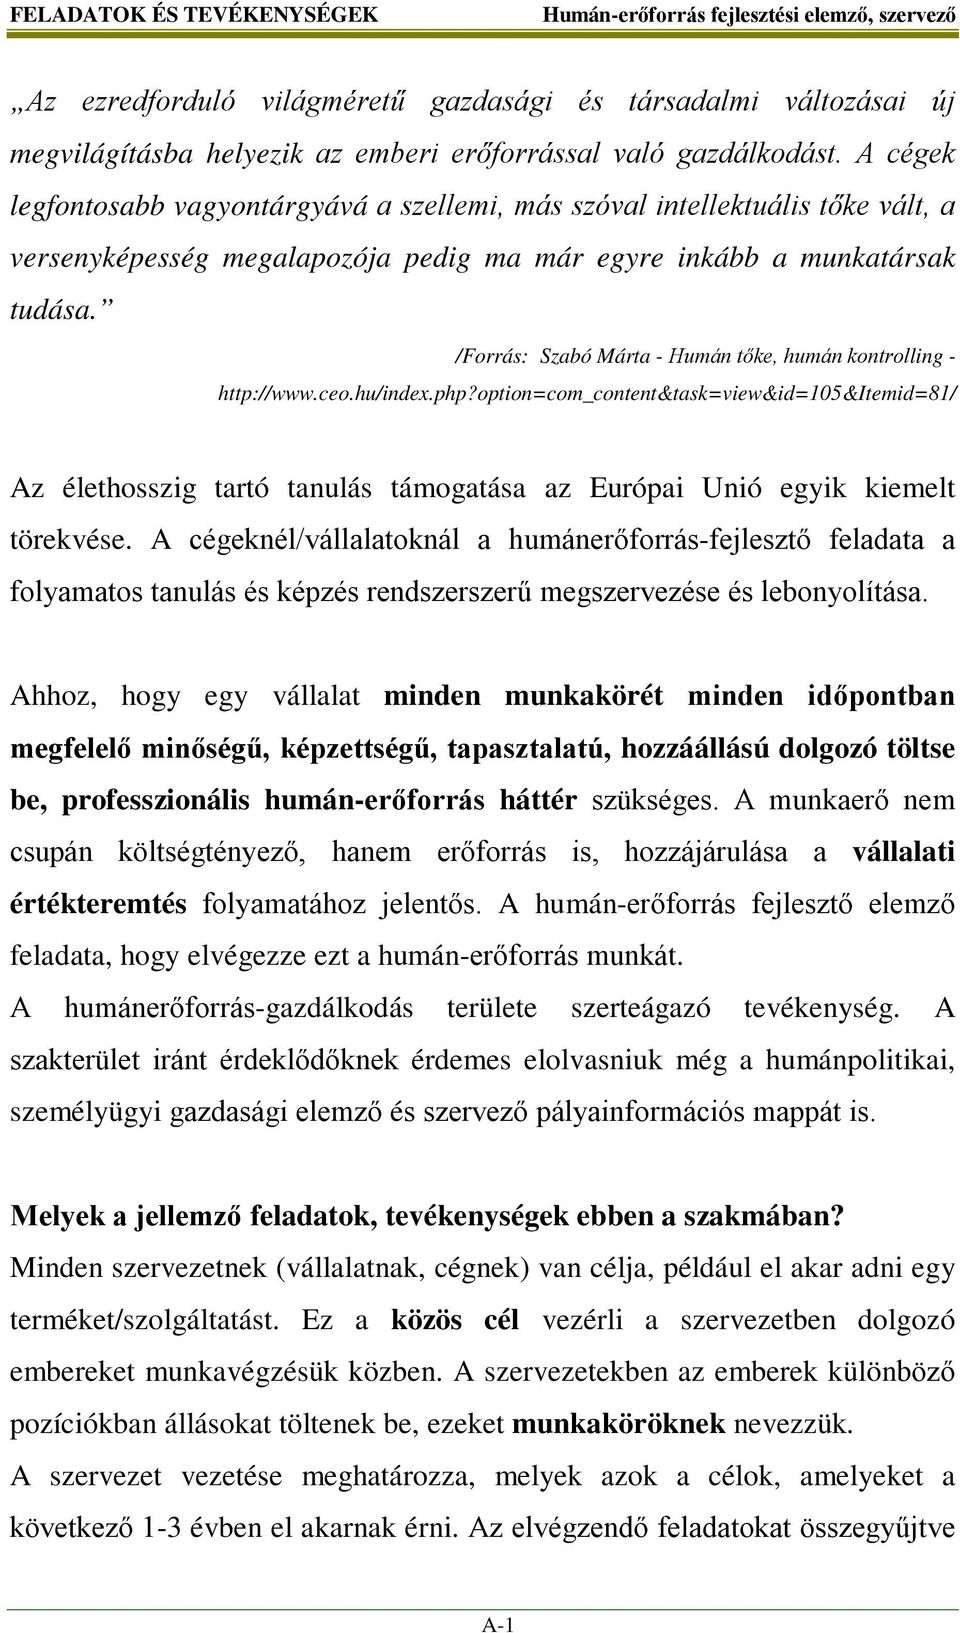 /Forrás: Szabó Márta - Humán tőke, humán kontrolling - http://www.ceo.hu/index.php?